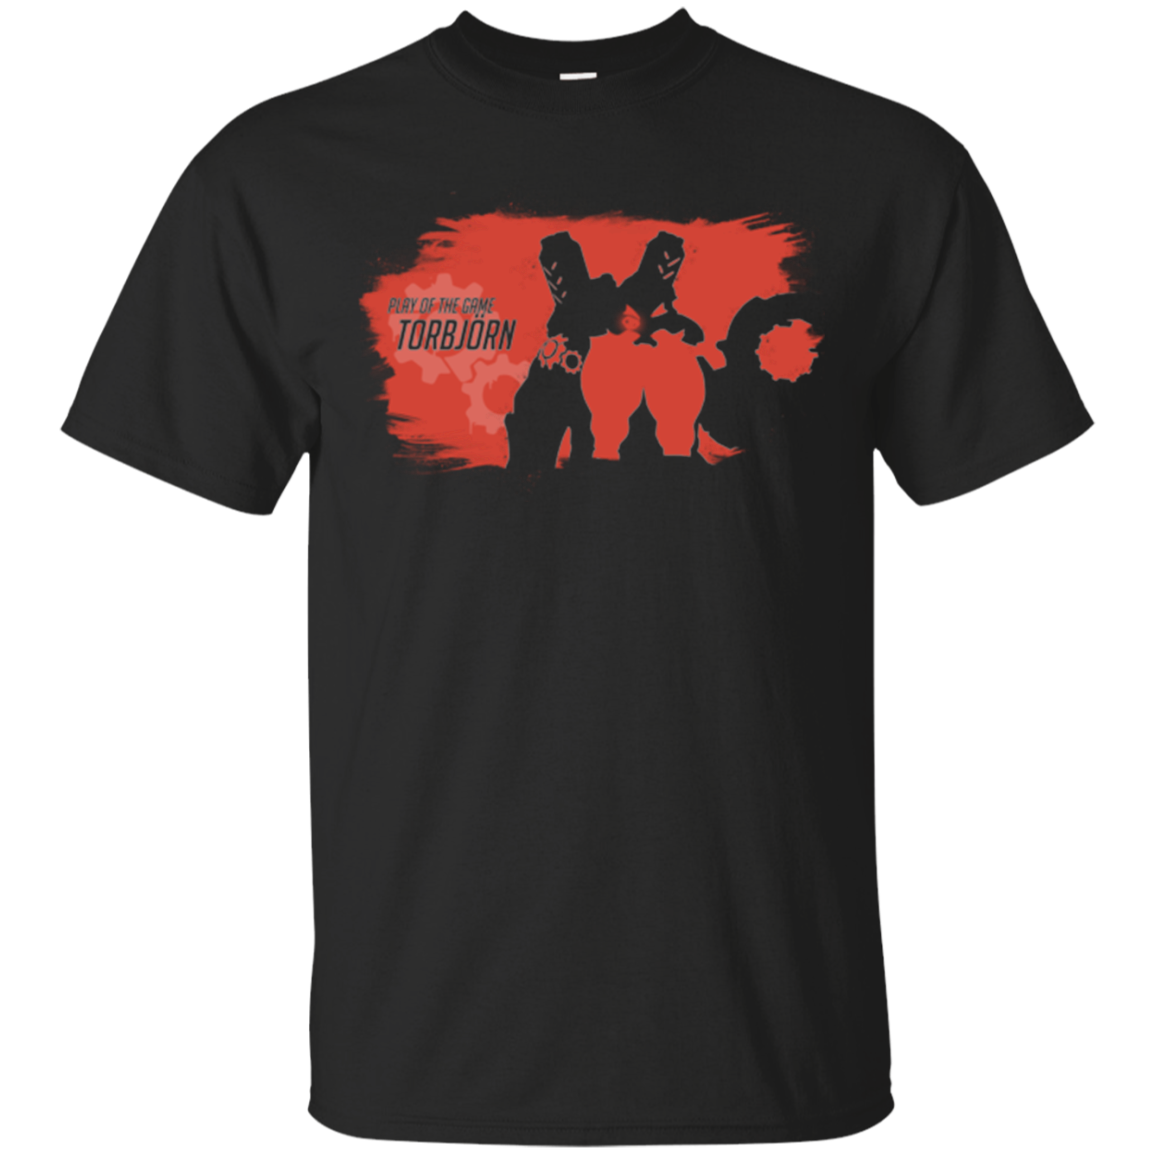 Torbjörn Base T-Shirt